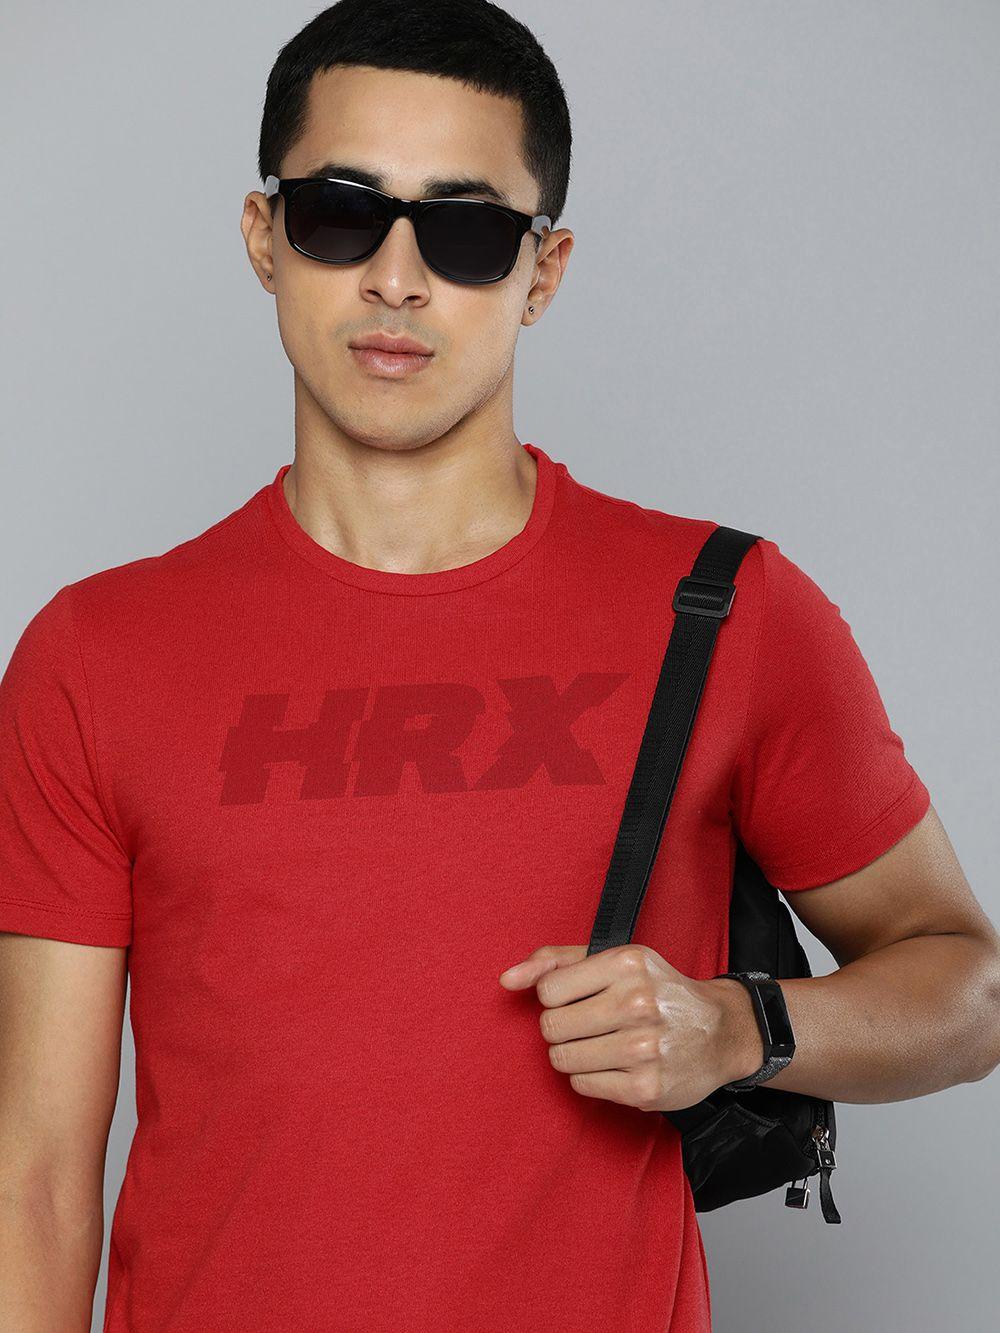 hrx by hrithik roshan men typography printed t-shirt